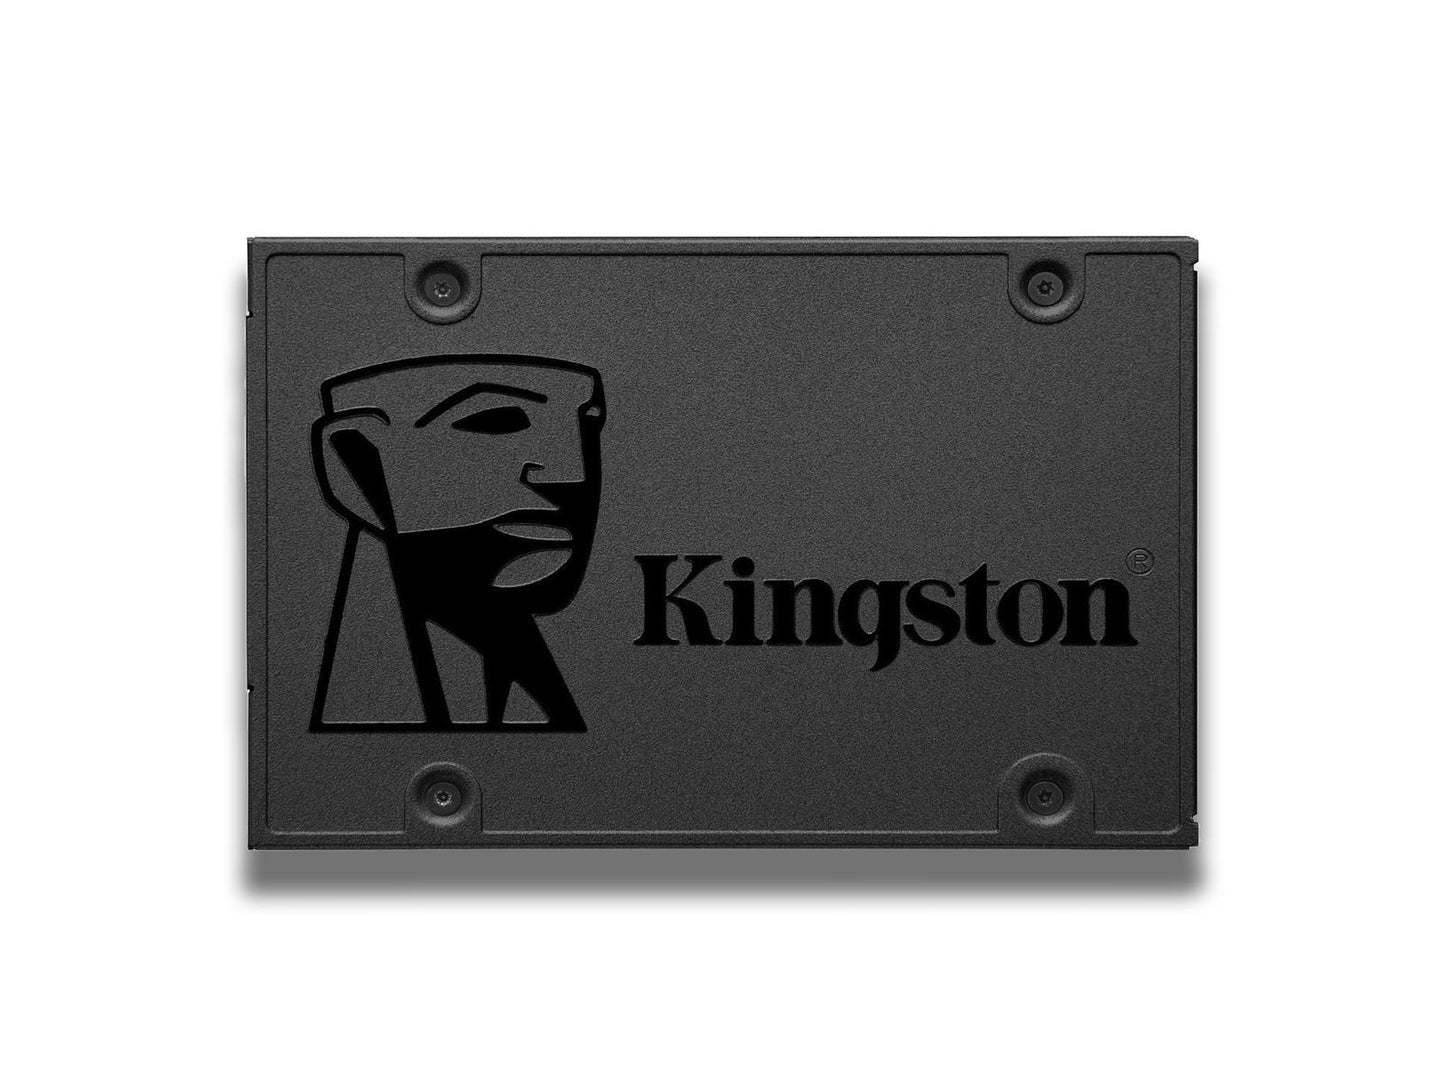 Kingston-A400 SSD Front View